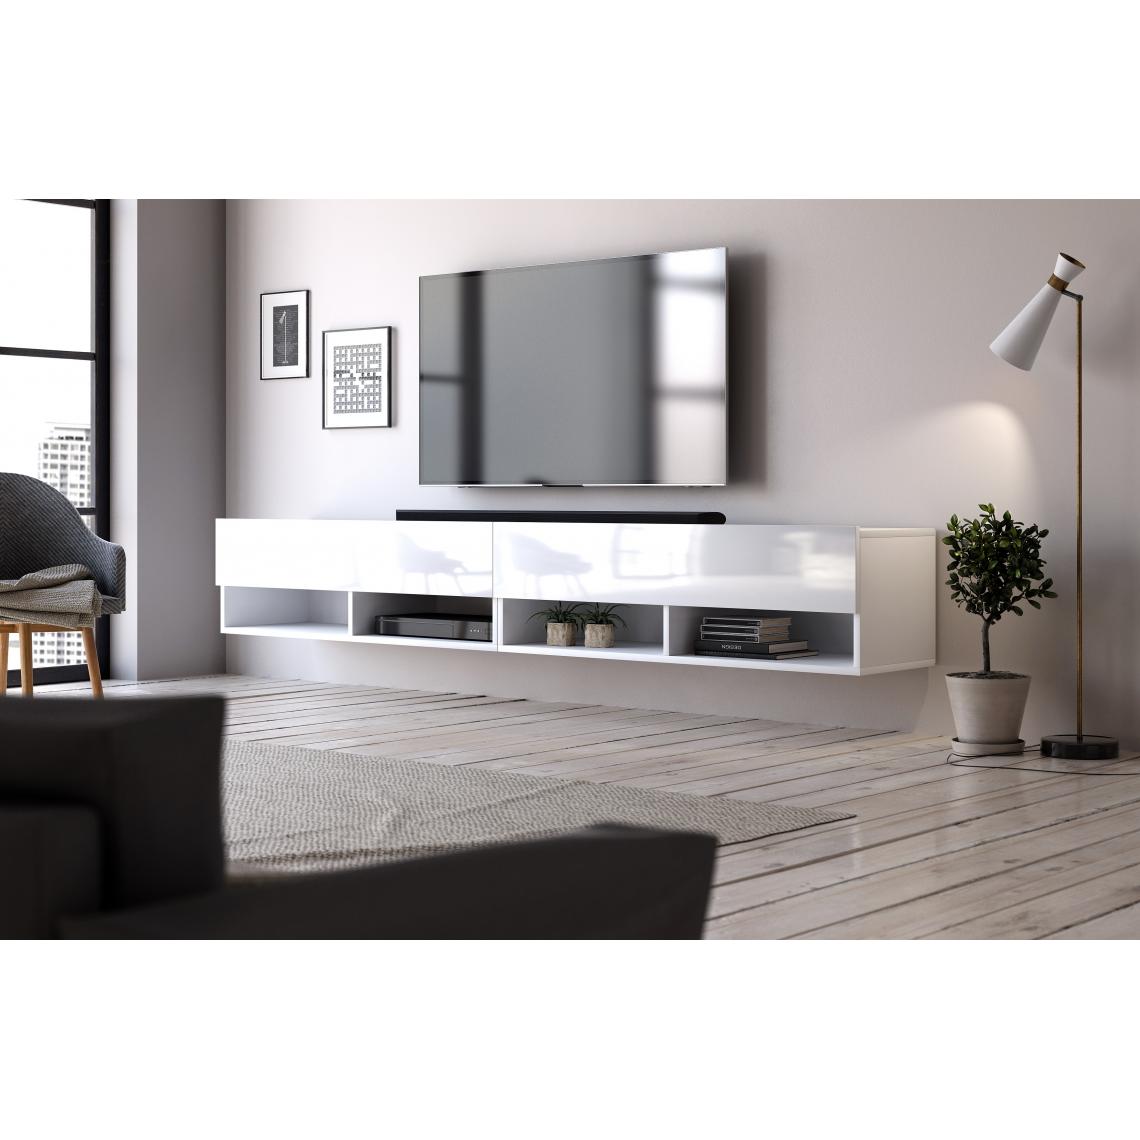 Vivaldi - VIVALDI Meuble TV - DERBY DOUBLE - 280 cm - blanc mat - blanc brillant - style moderne - Meubles TV, Hi-Fi